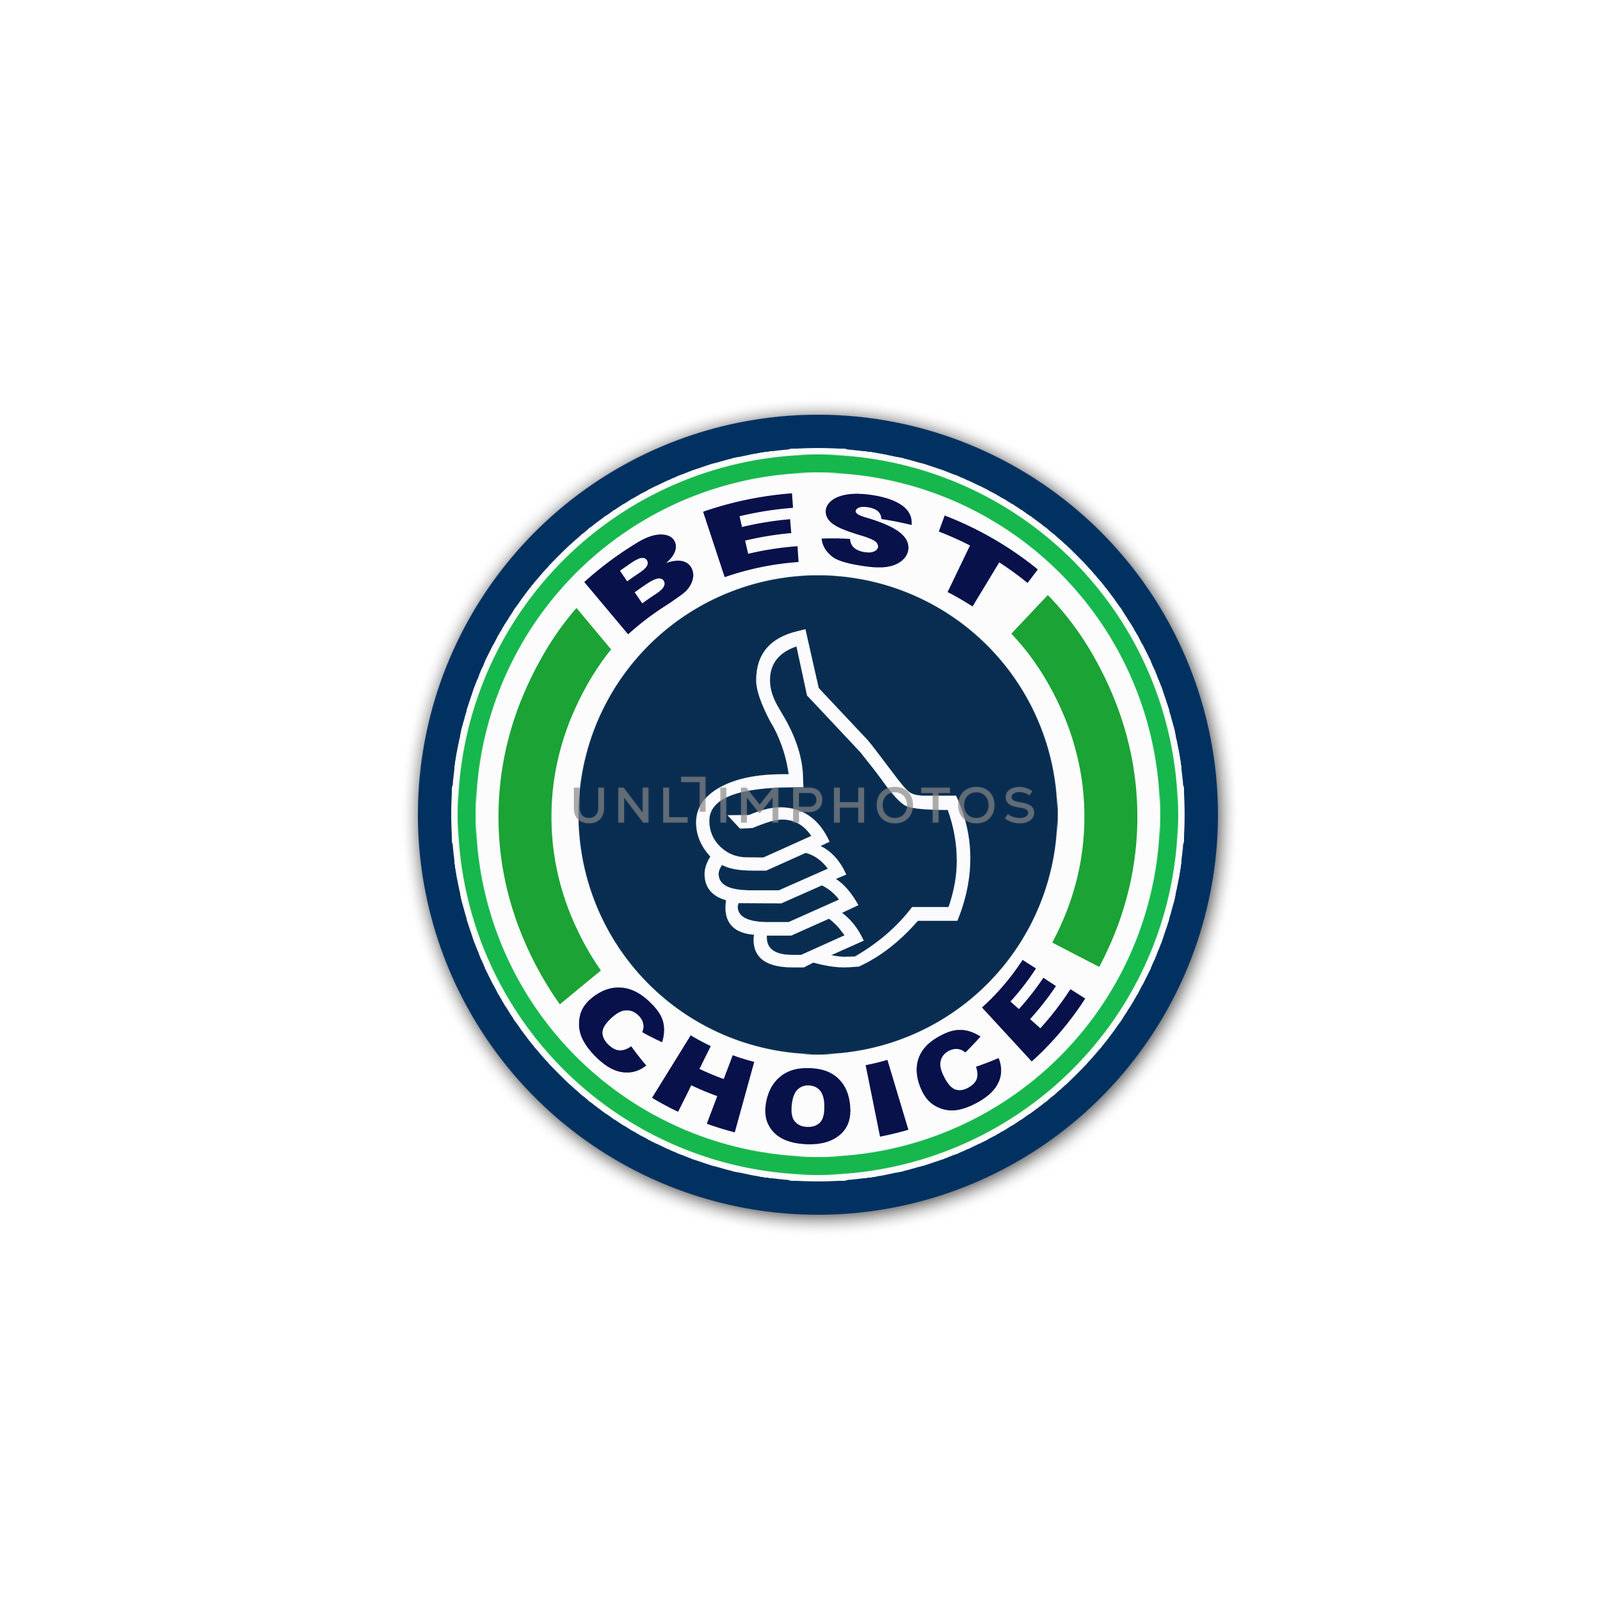 Best choice logo